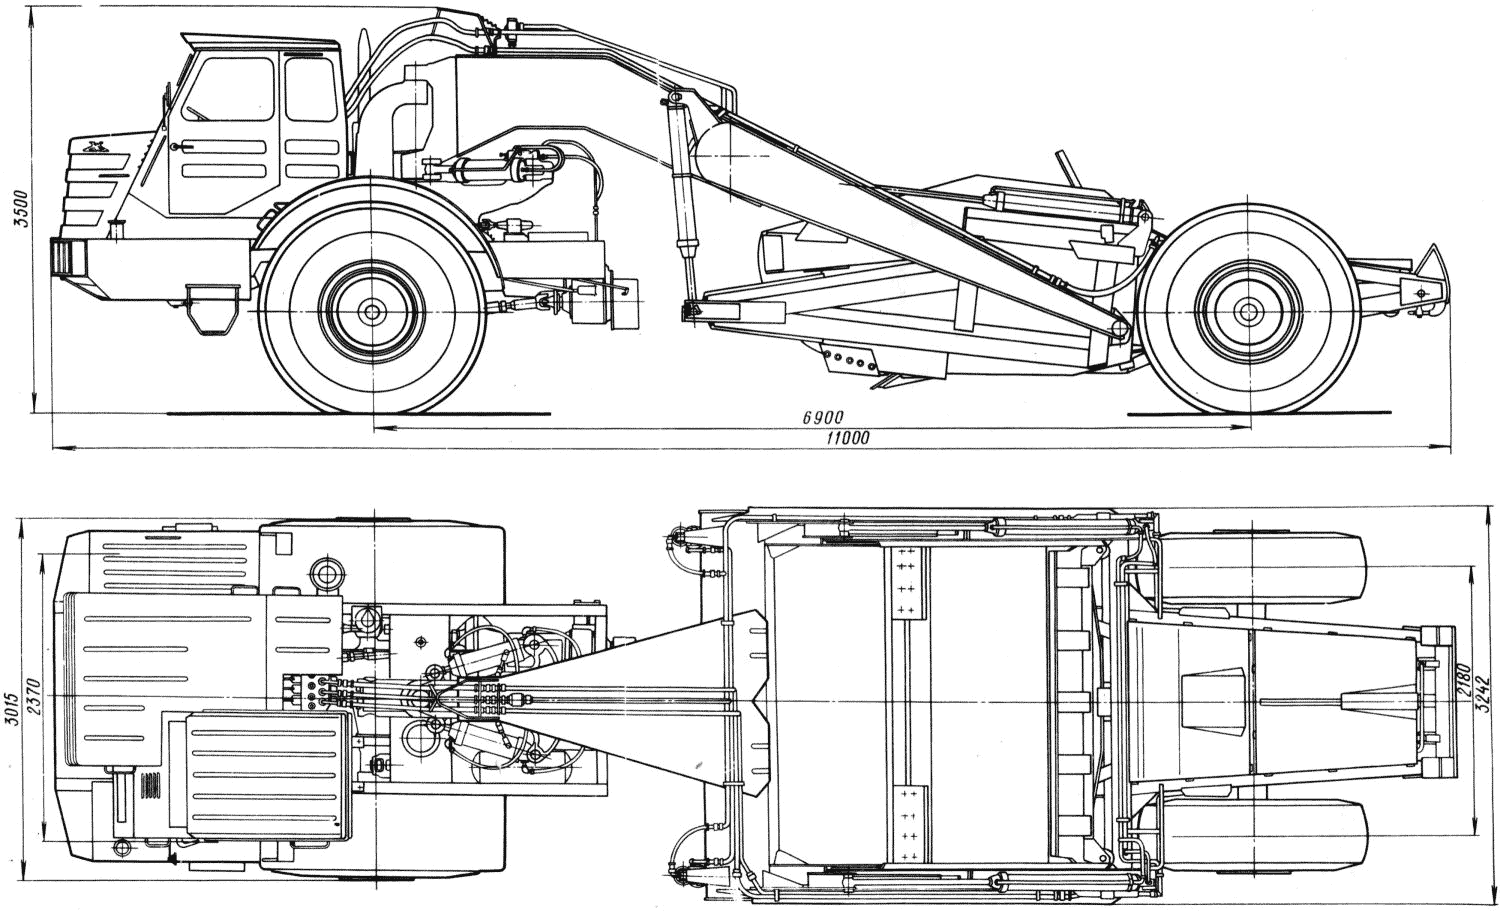 MoAZ-546P blueprint